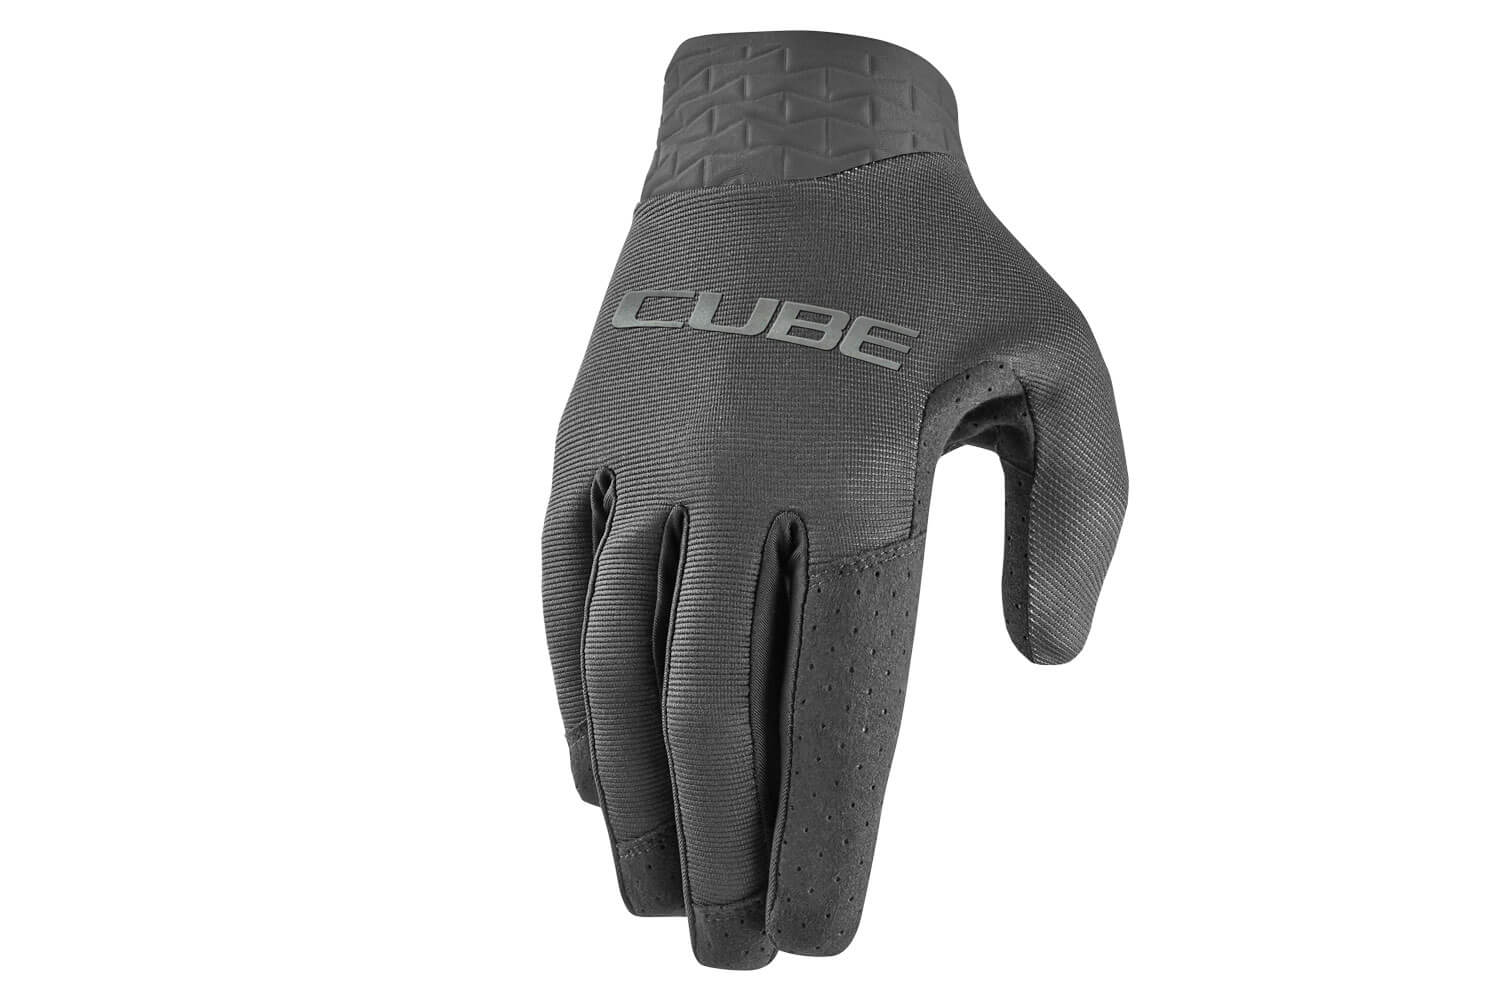 Cube Handschuhe Performance Langfinger